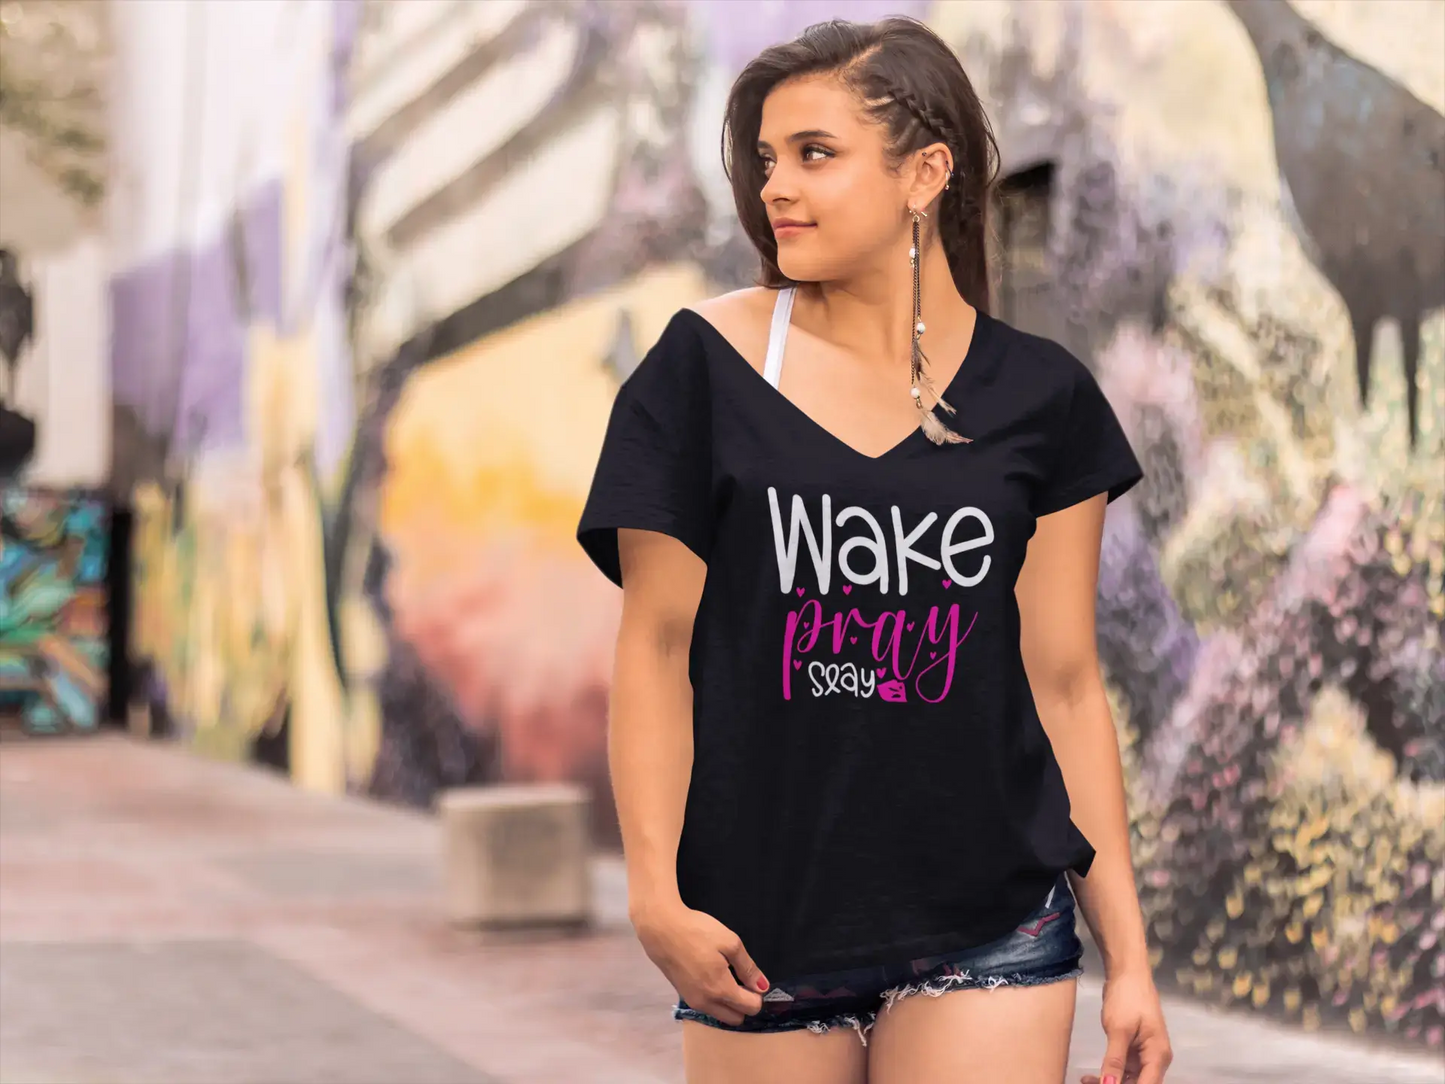 ULTRABASIC Women's Novelty T-Shirt Wake Pray Slay - Funny Vintage Tee Shirt